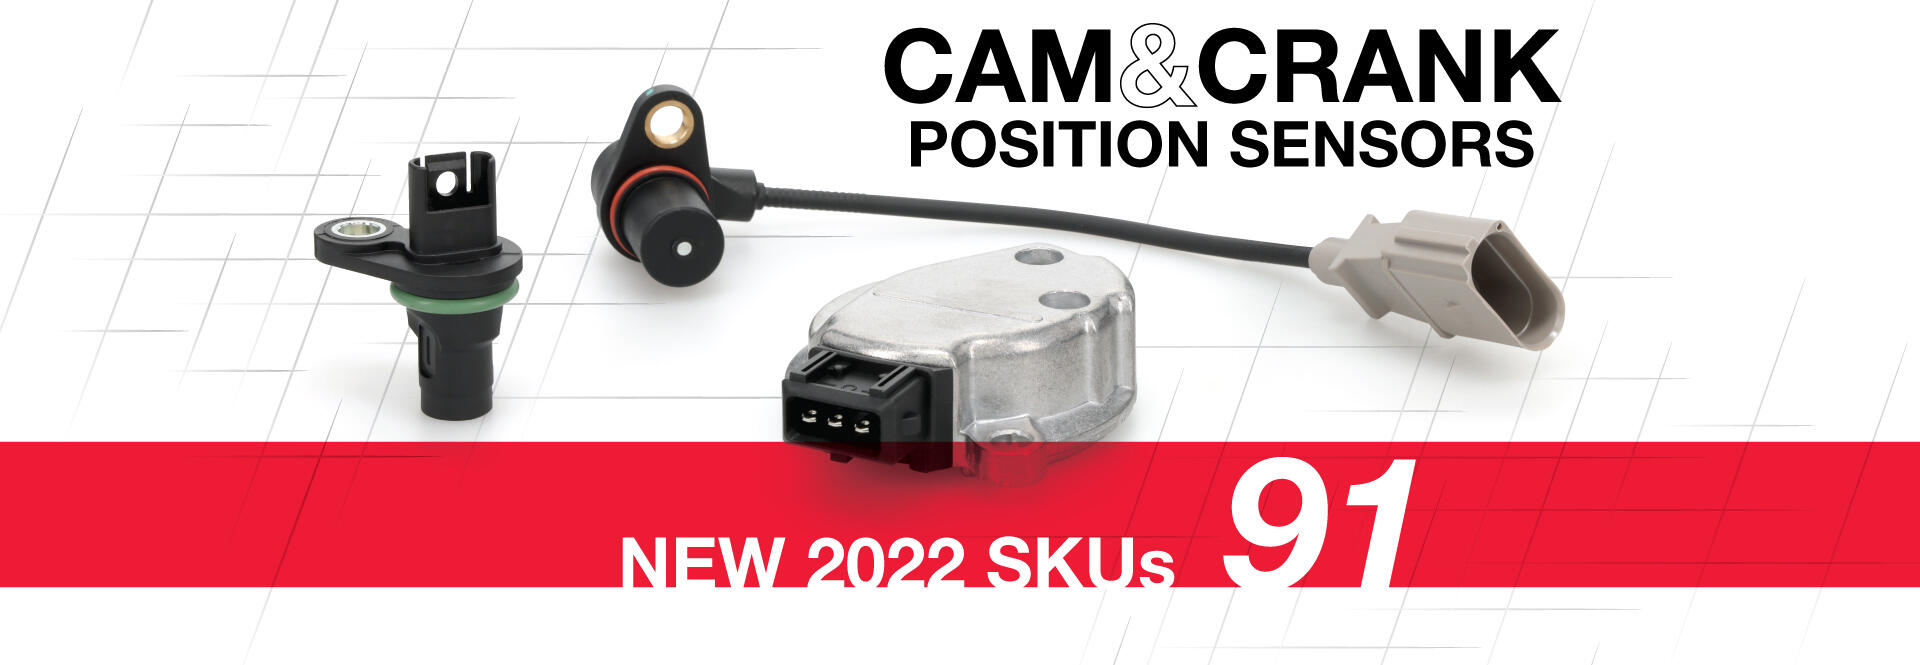 91 Camshaft and Crankshaft Sensors Launched in 2022